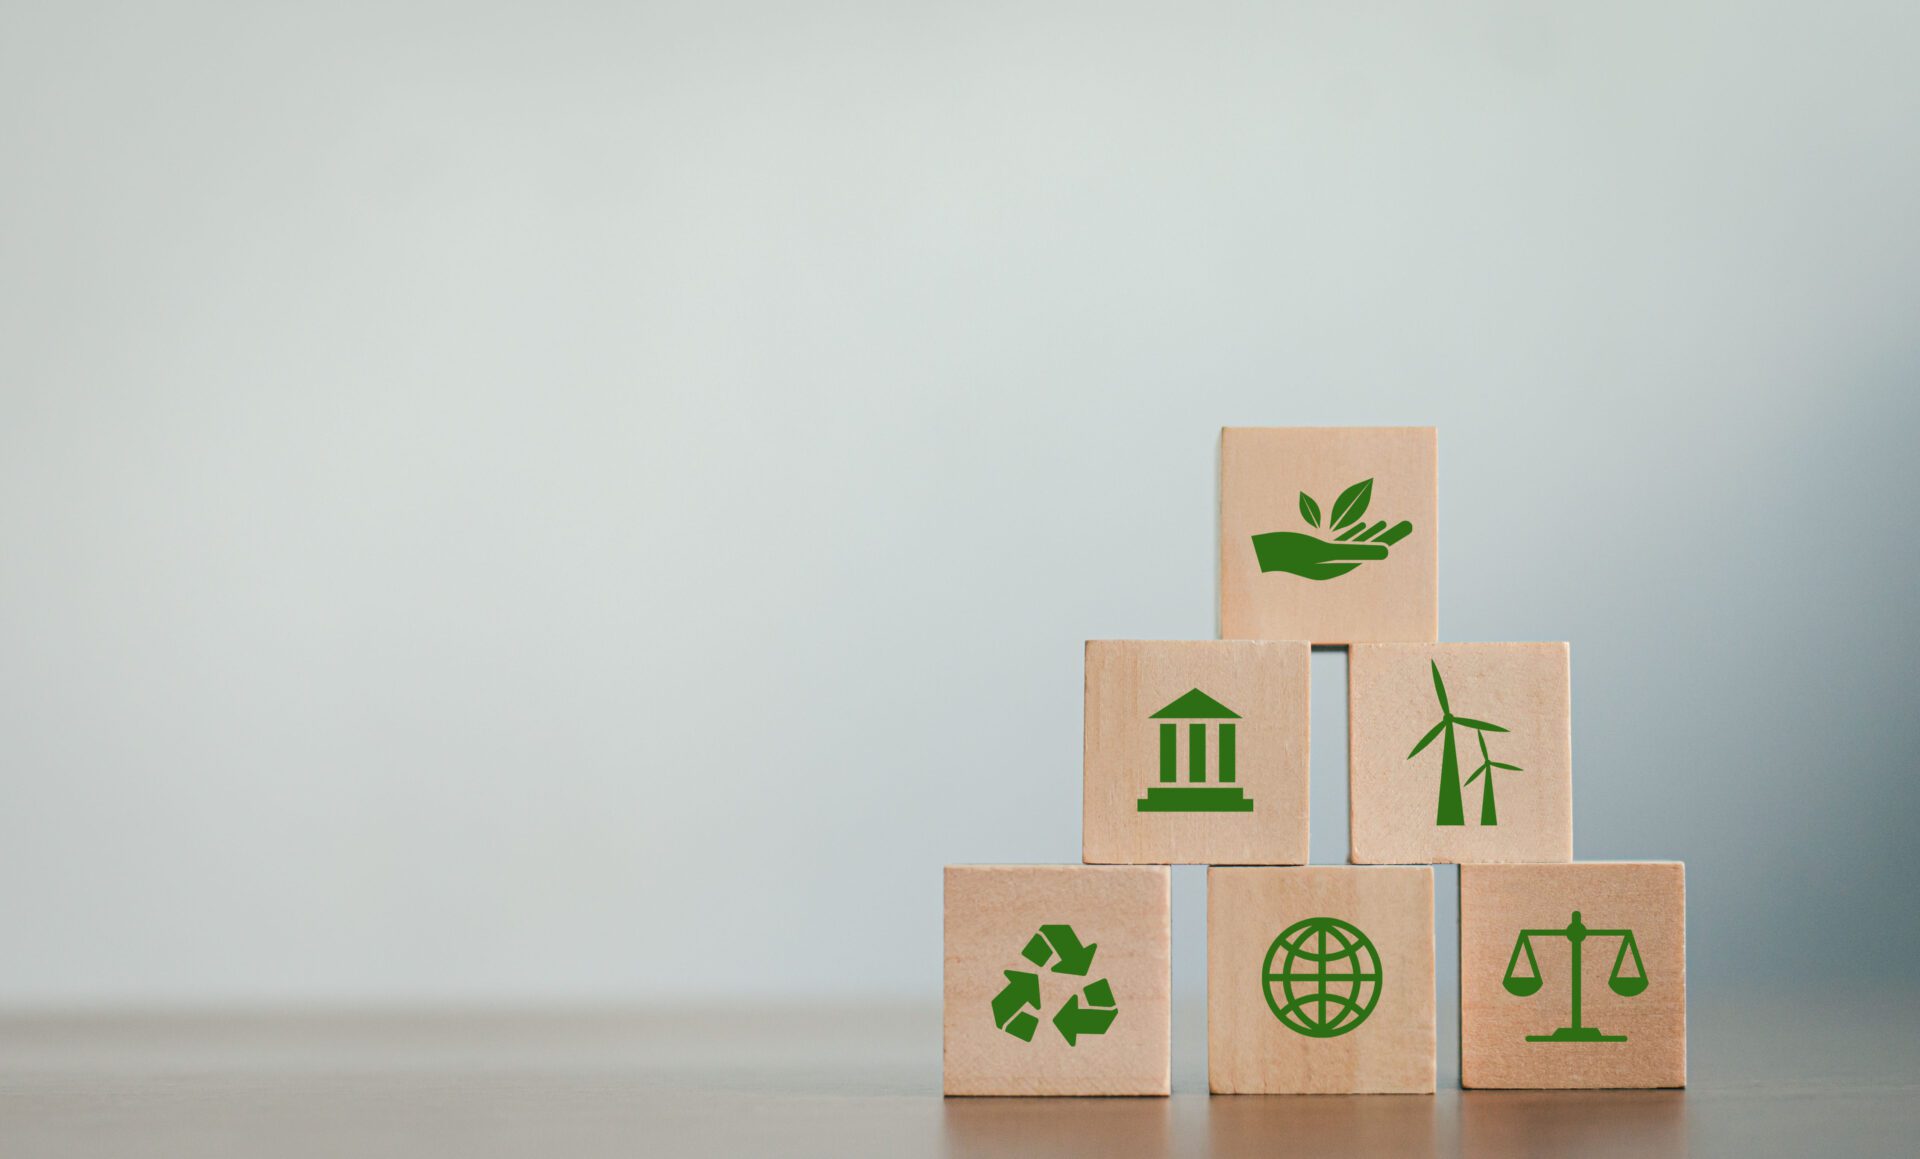 Environmental, Social, and Corporate Governance (ESG)